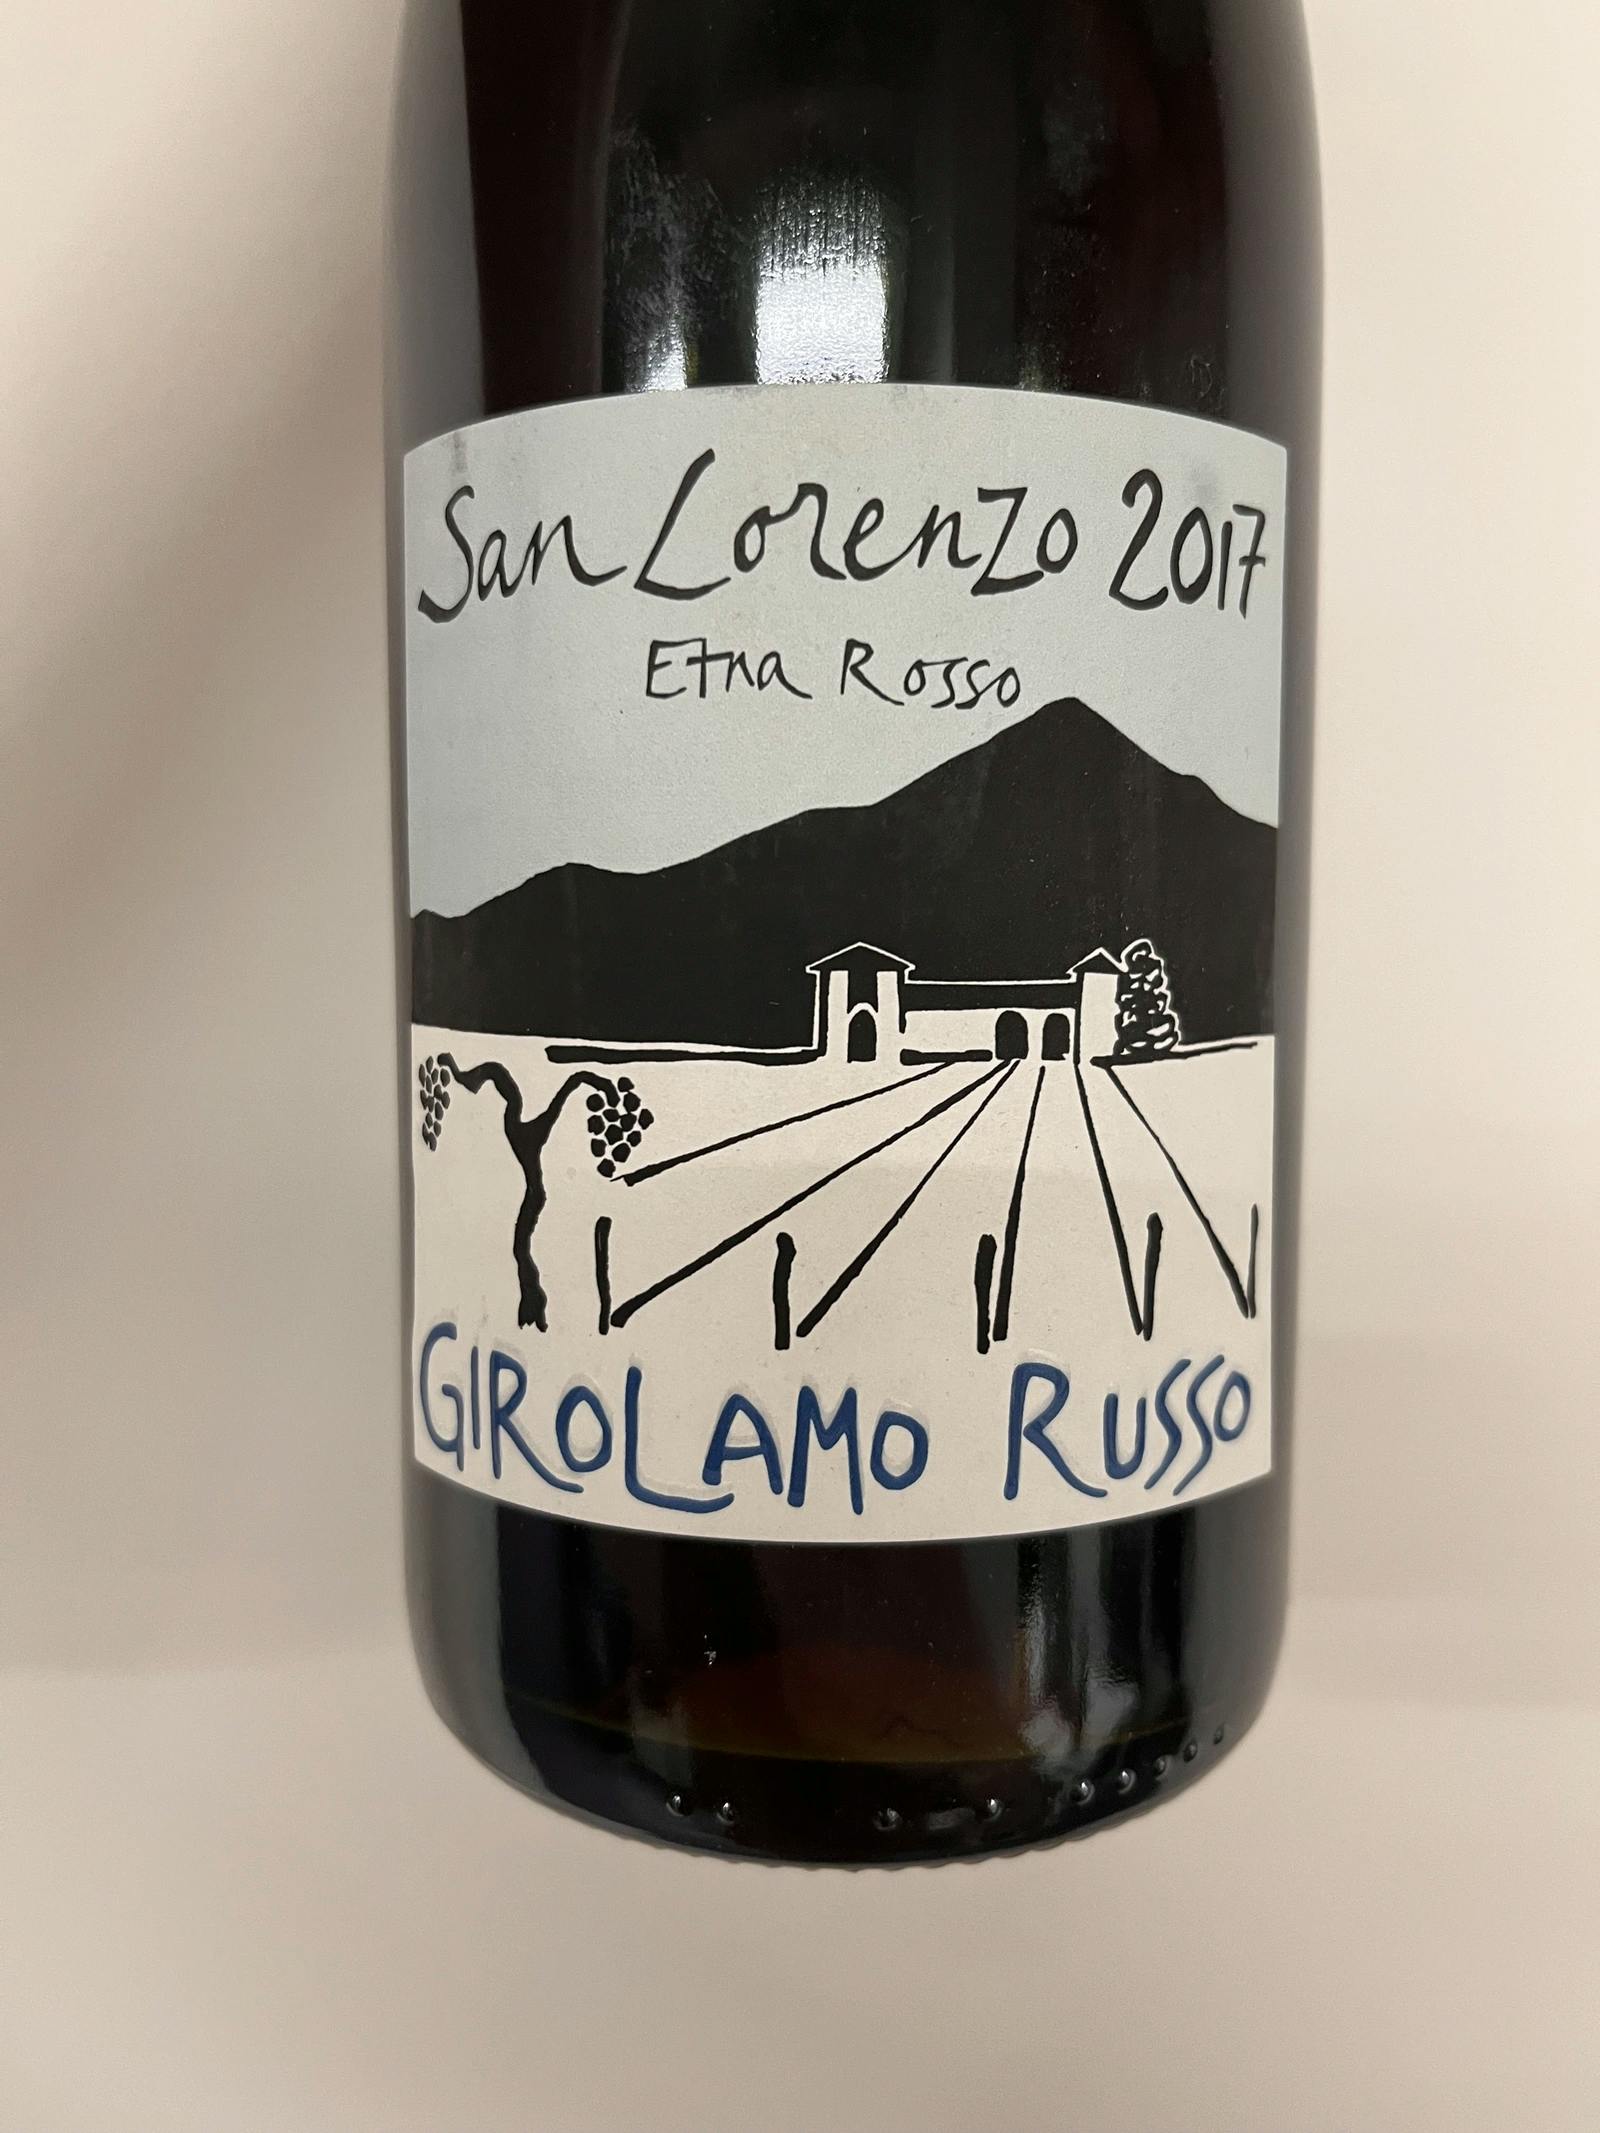 Girolamo Russo Etna Rosso San Lorenzo 2017